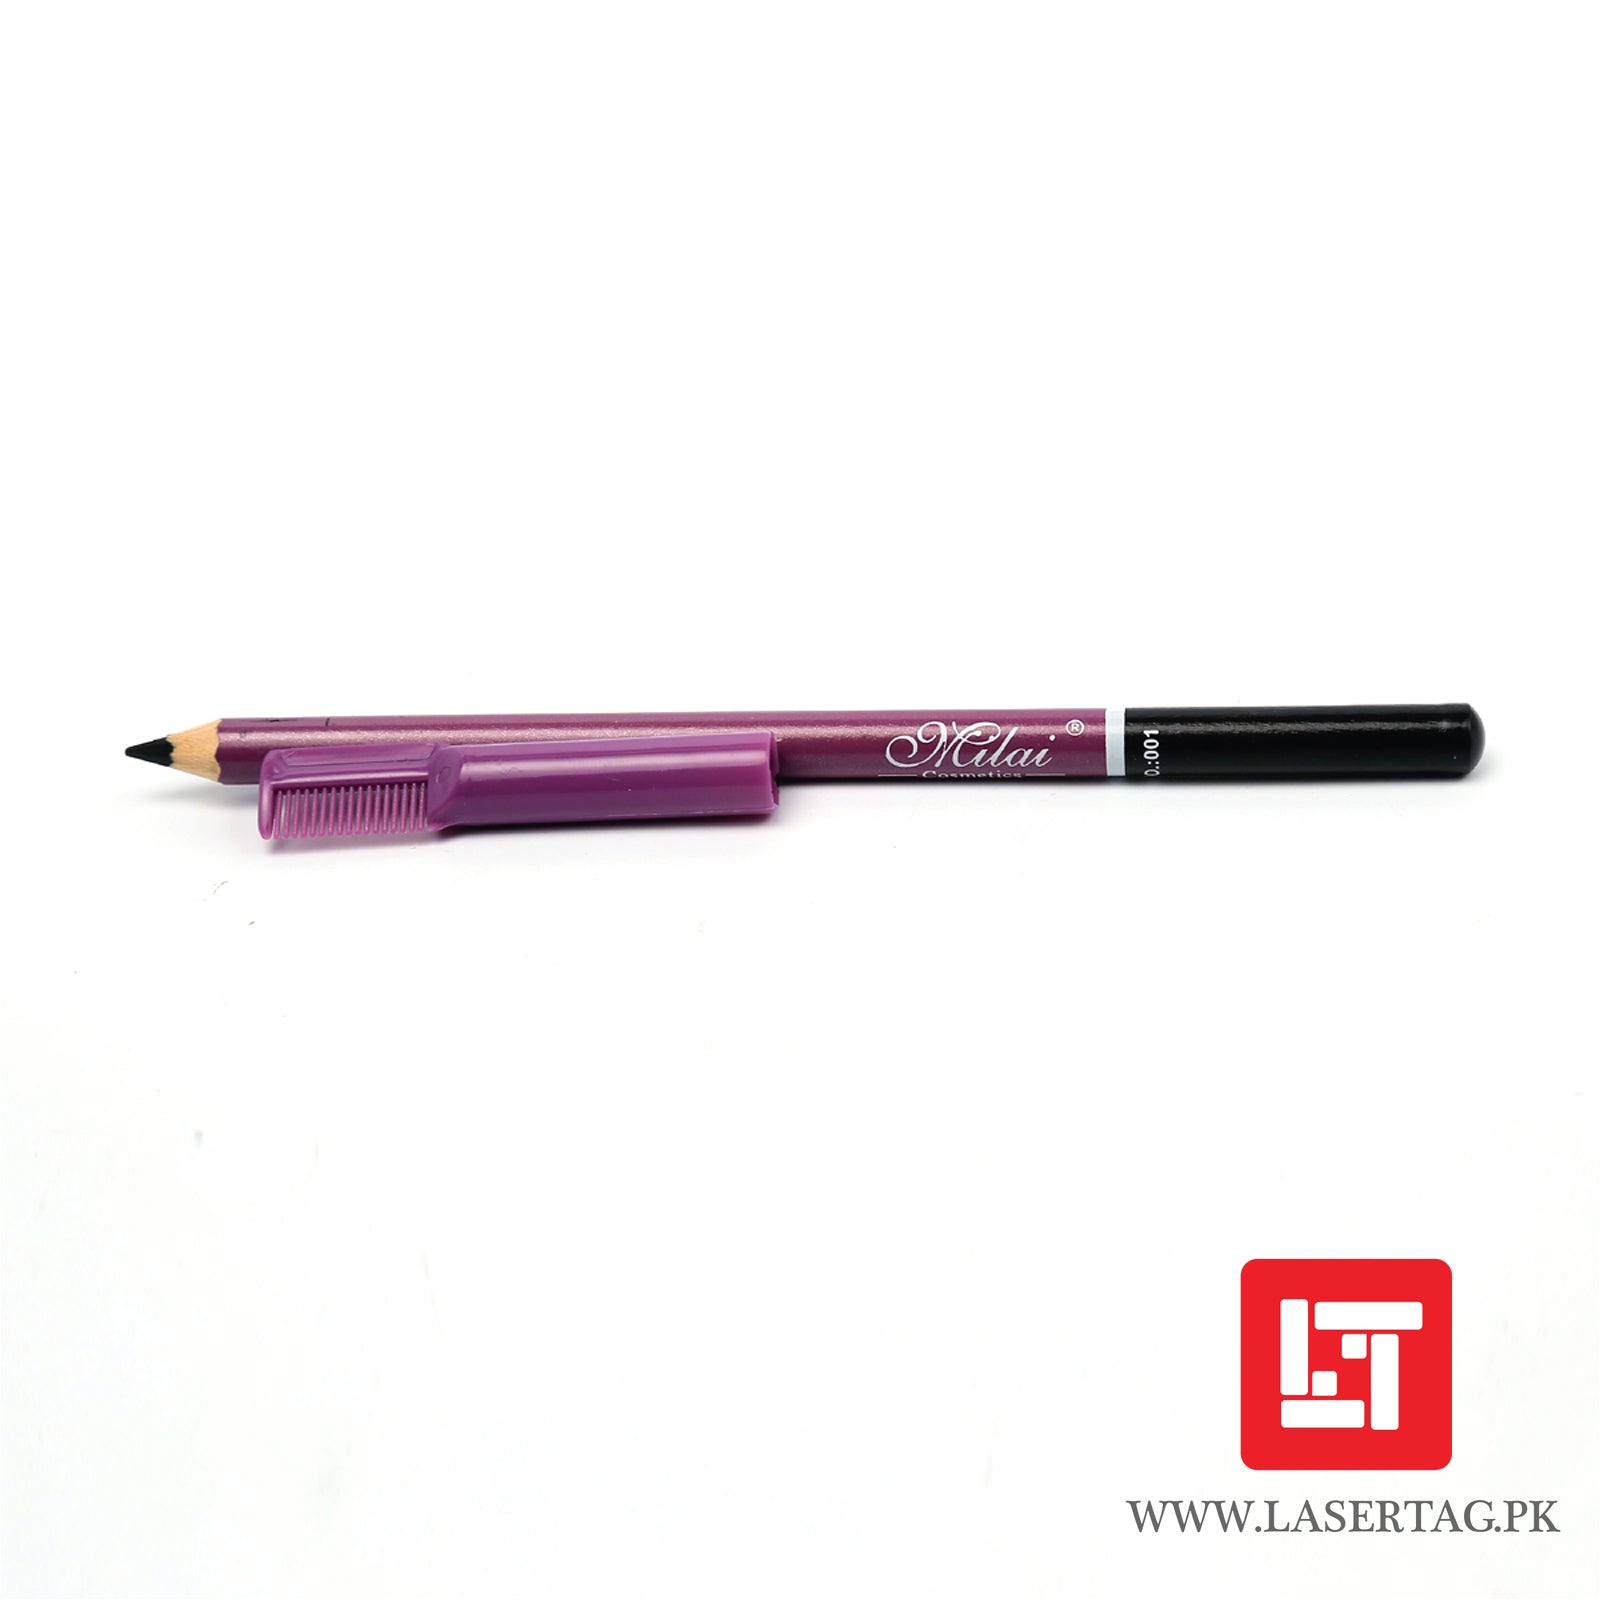 Milai Eyebrow Pencil Perfect Eyebrows Waterproof & Long Lasting Black freeshipping - lasertag.pk